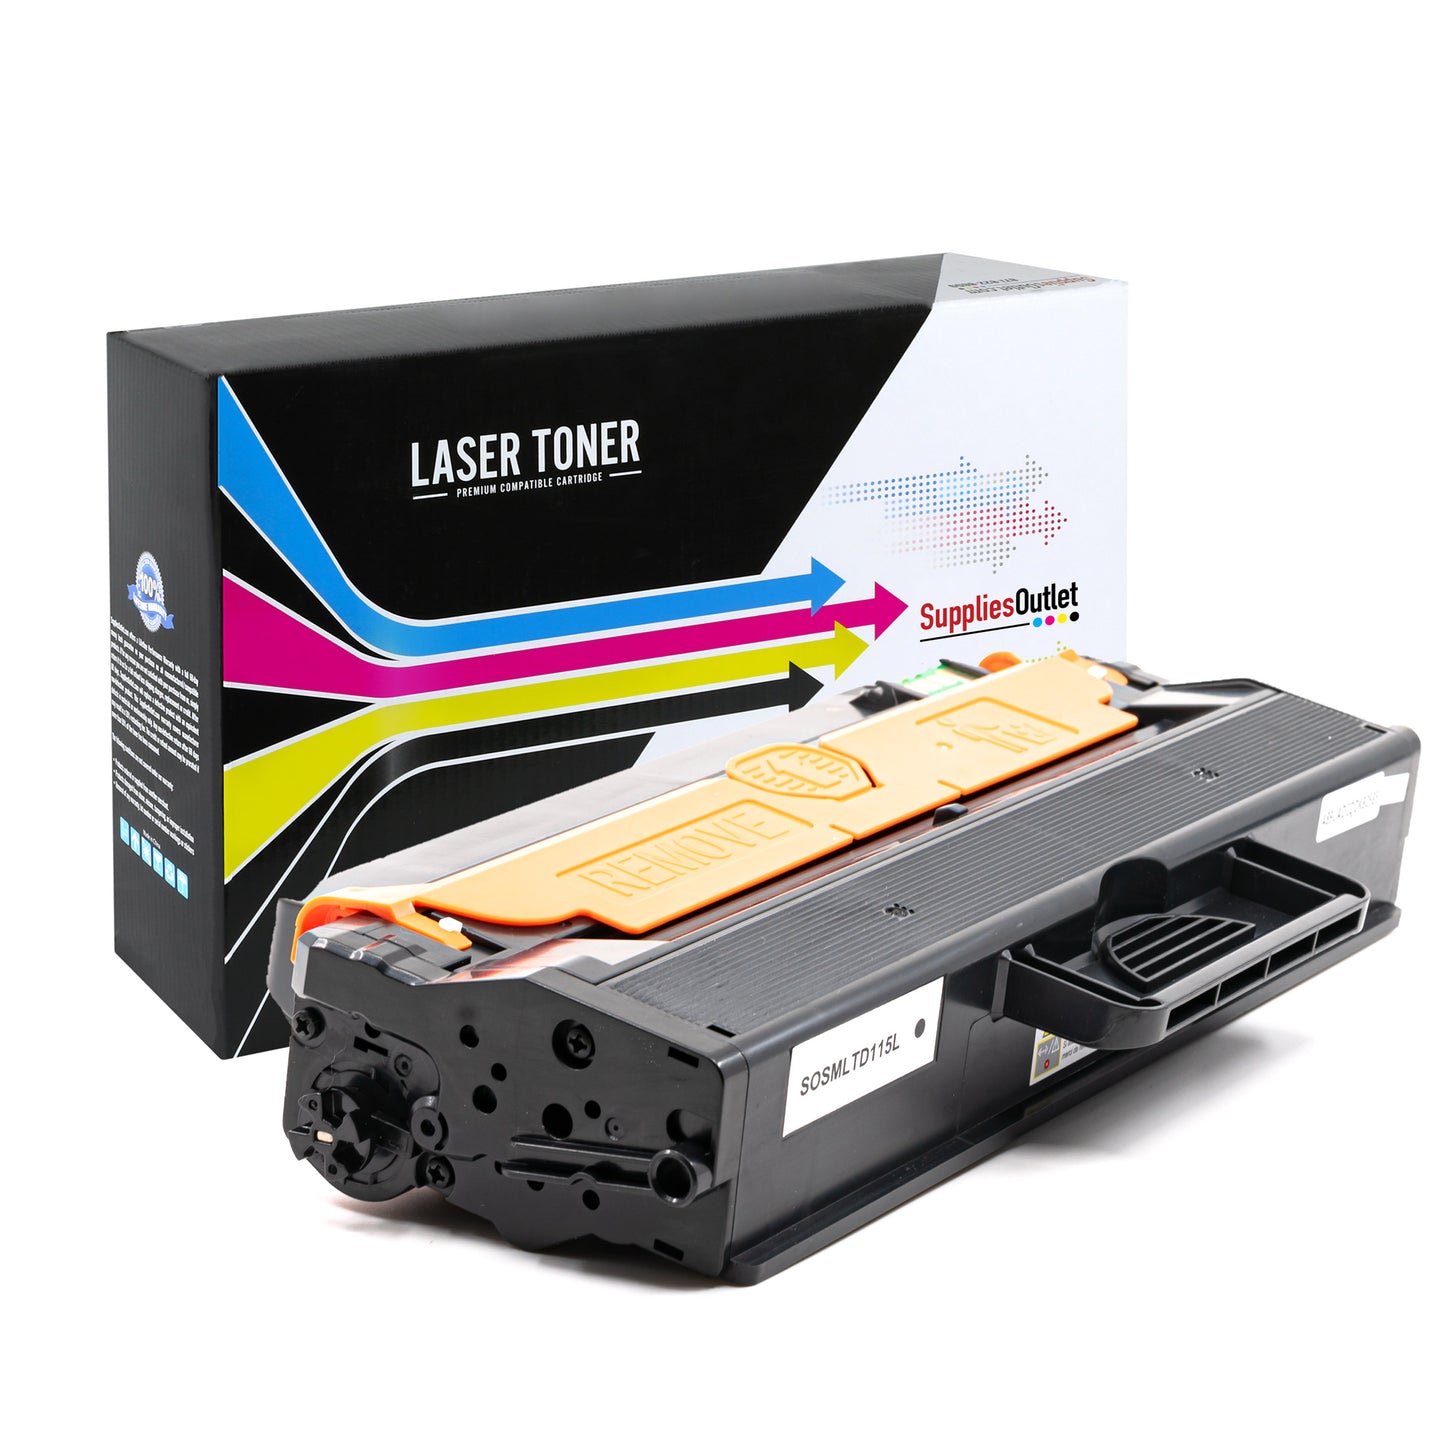 Compatible Samsung MLT-D115L Black Toner Cartridge - 3,000 Page yield